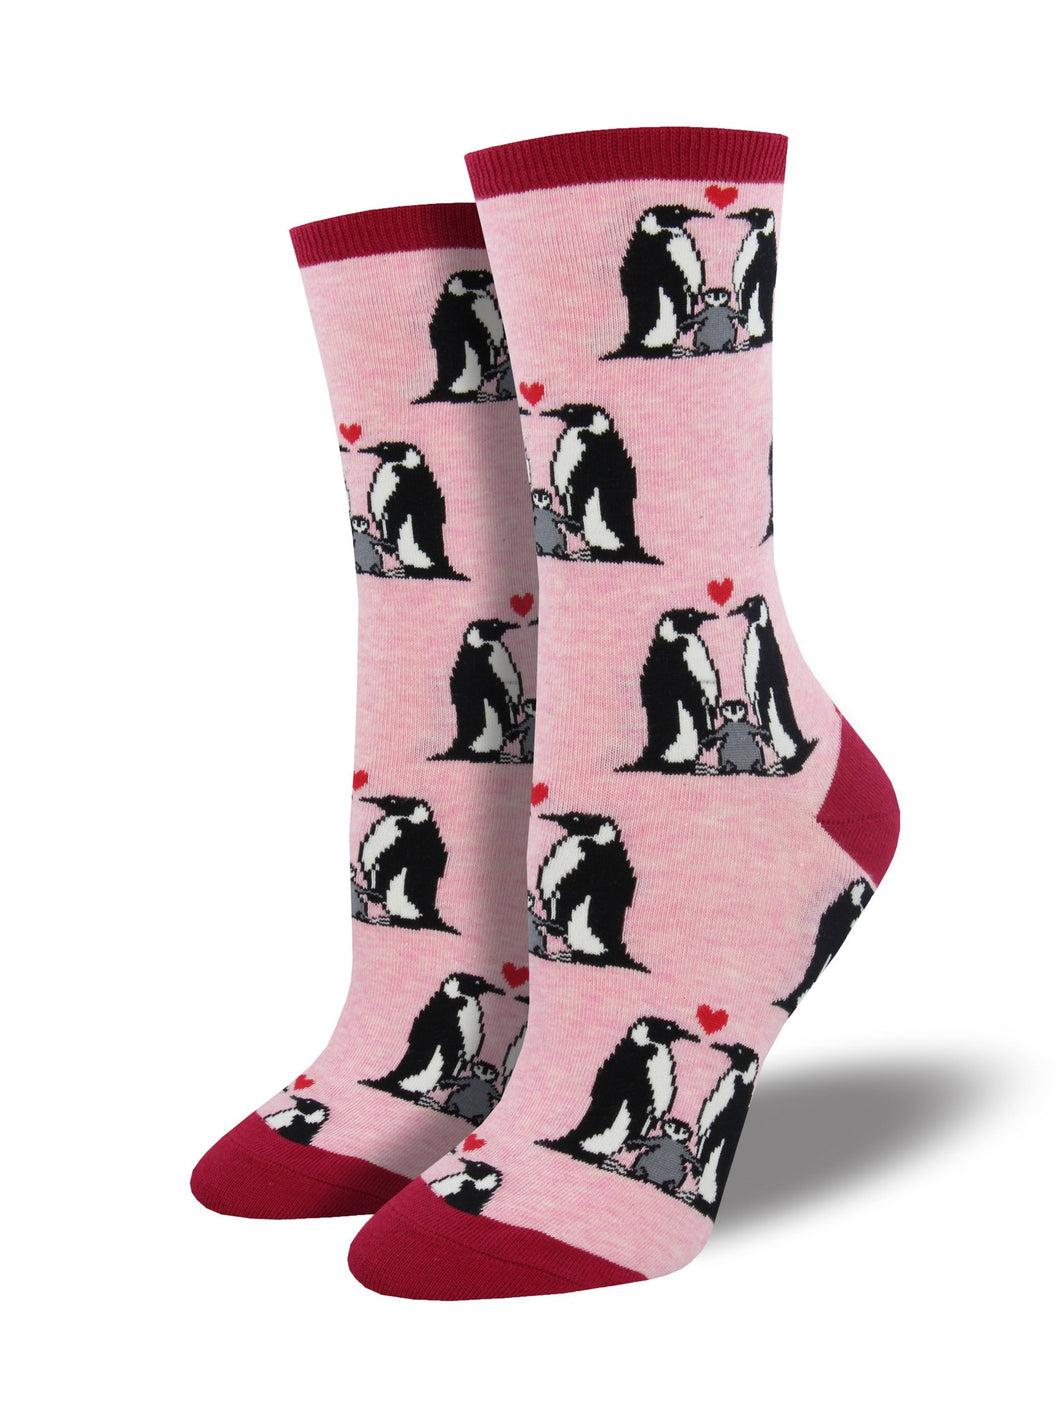 Penguin Love - Ladies Crew Socks by Socksmith